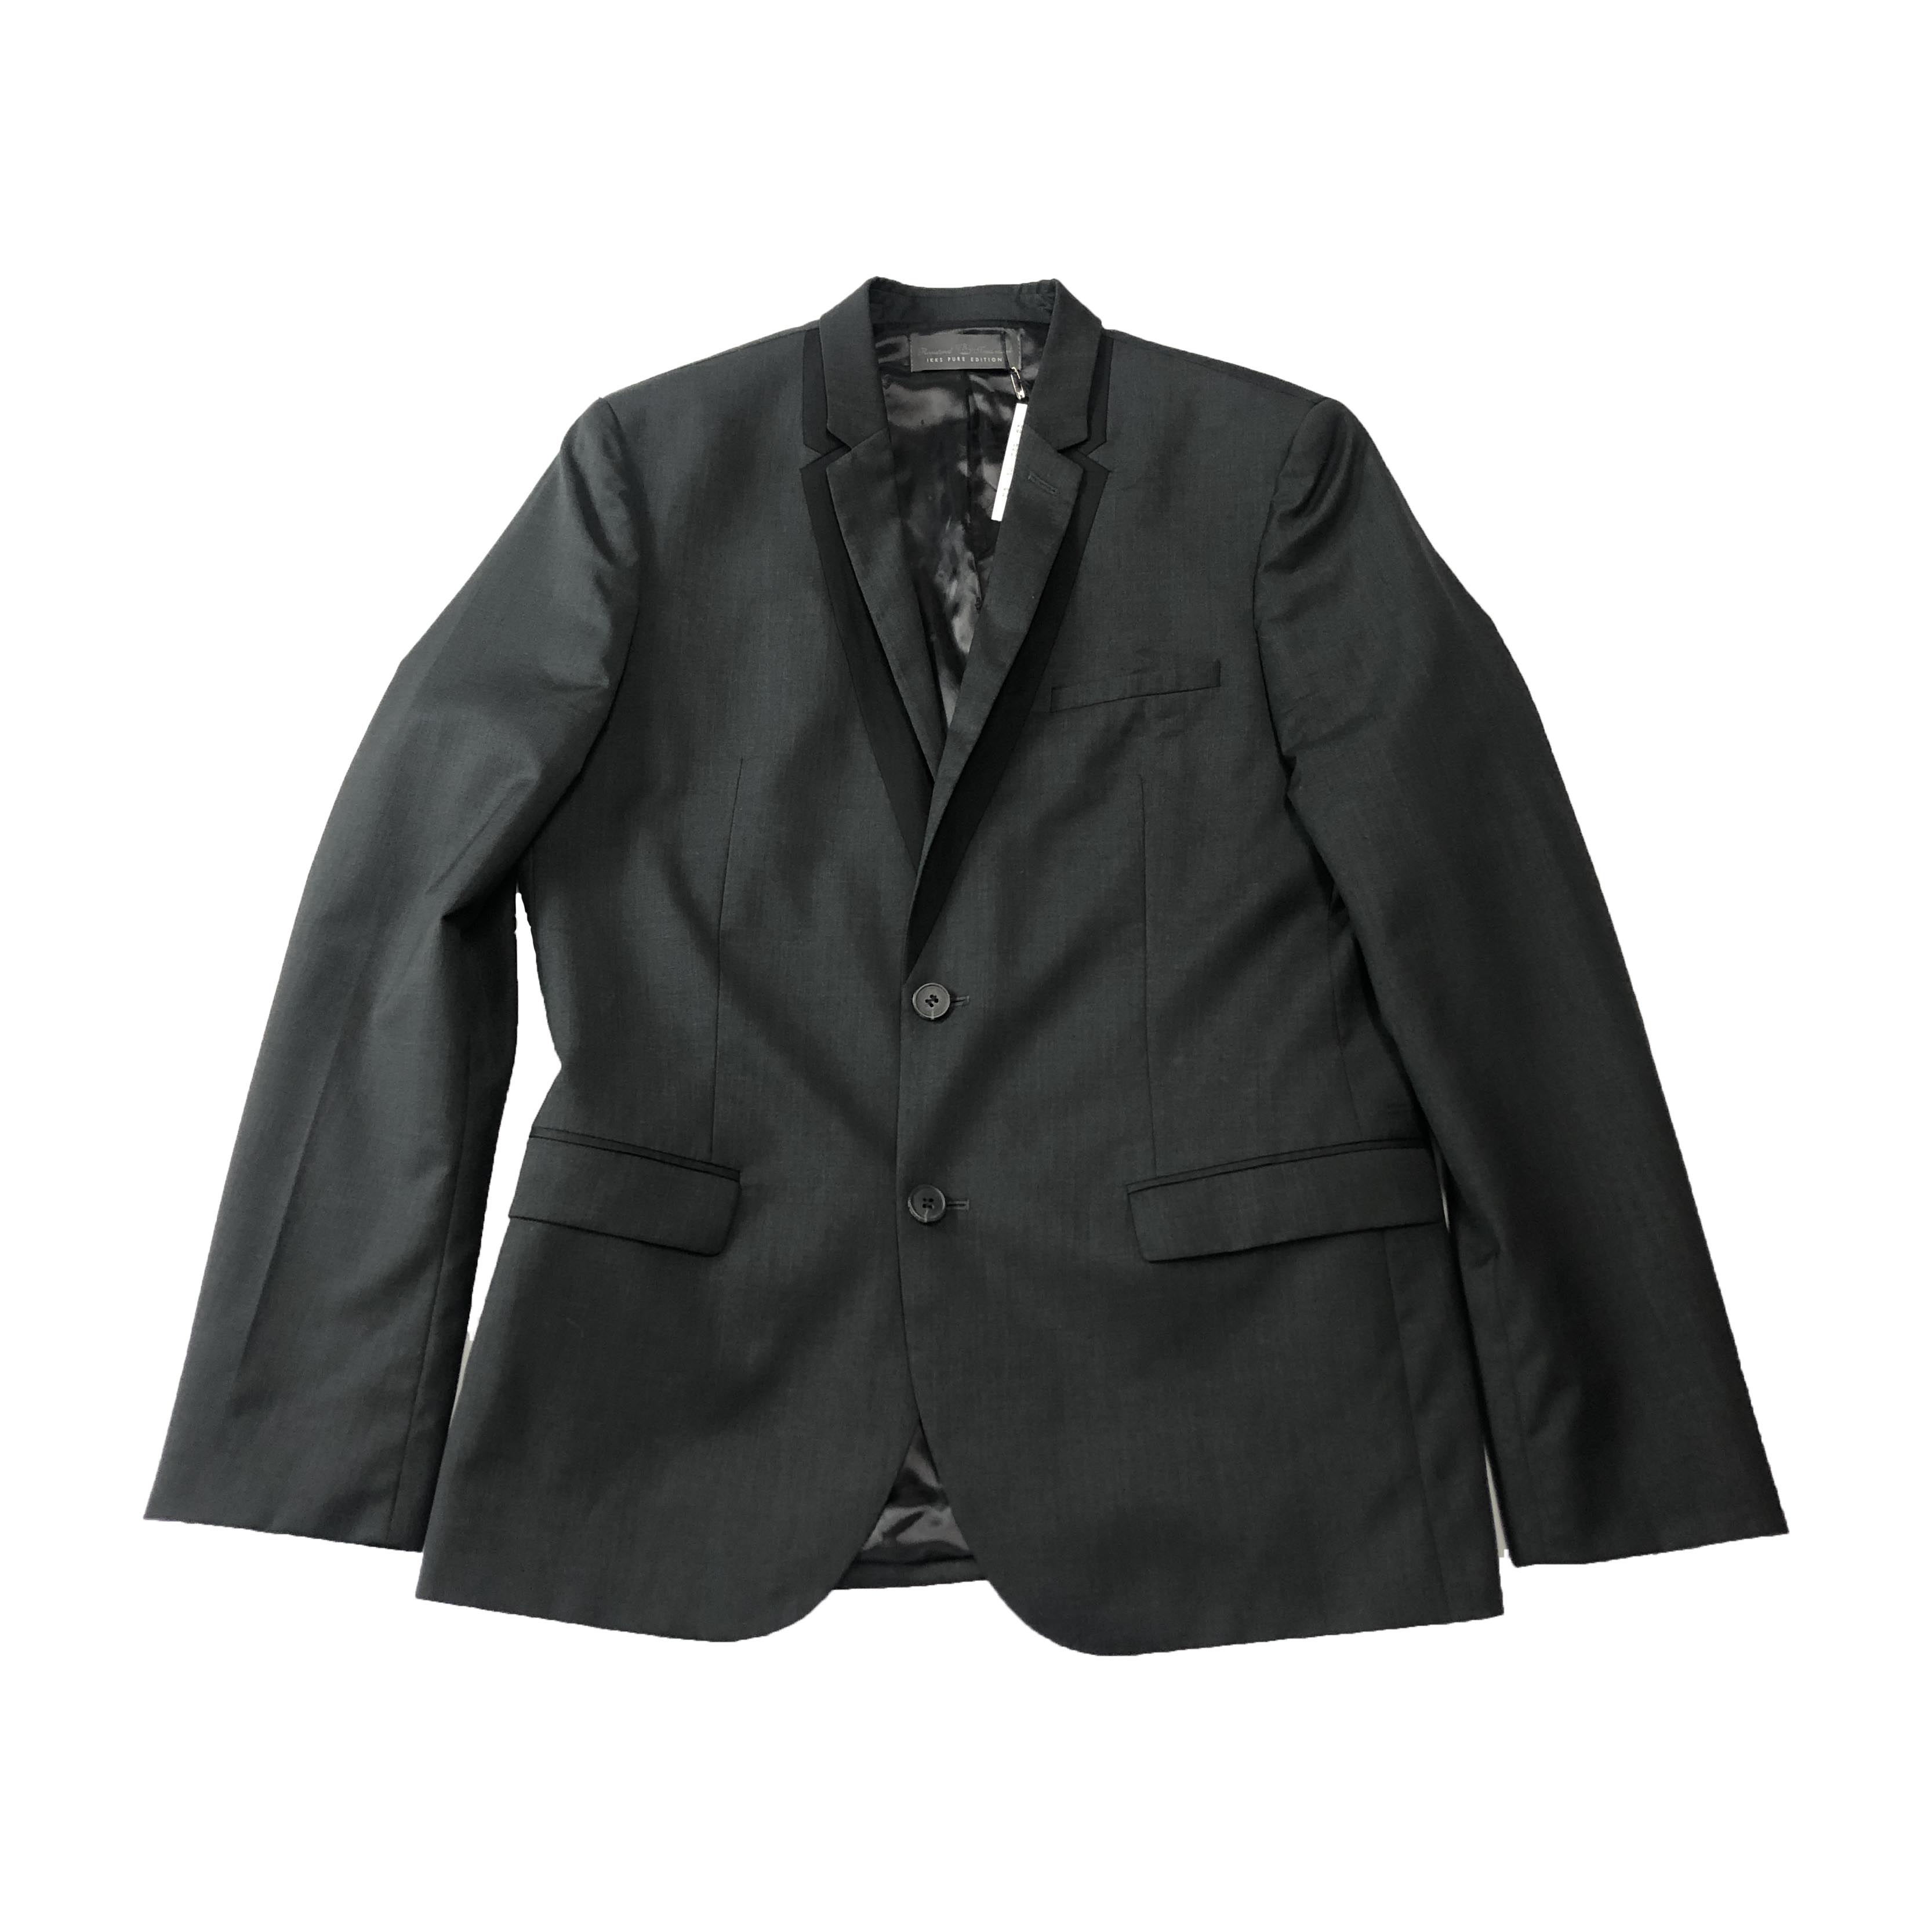 [Ikks Pure Edition] Gray Jacket - Size 50